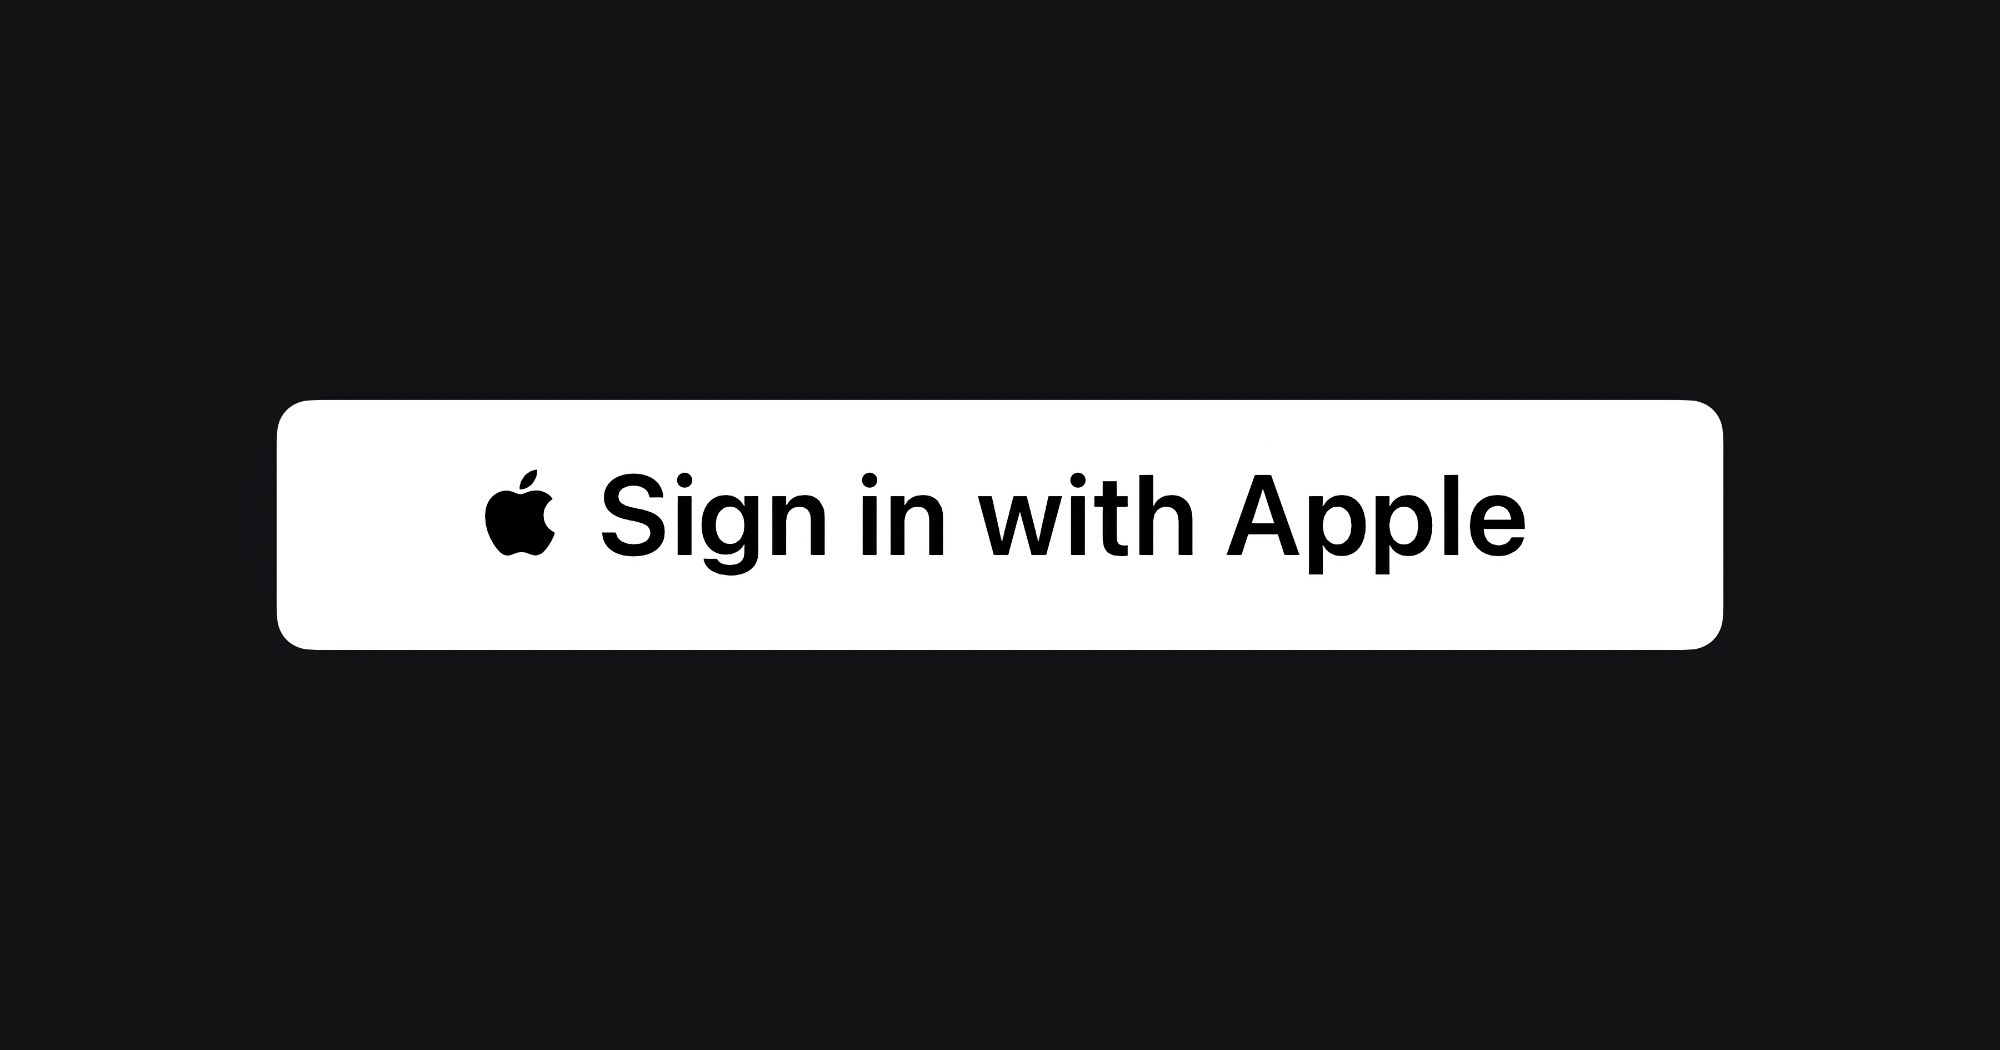 apple-uppdaterar-riktlinjer-f-r-sign-in-with-apple-utvecklare-m-ste